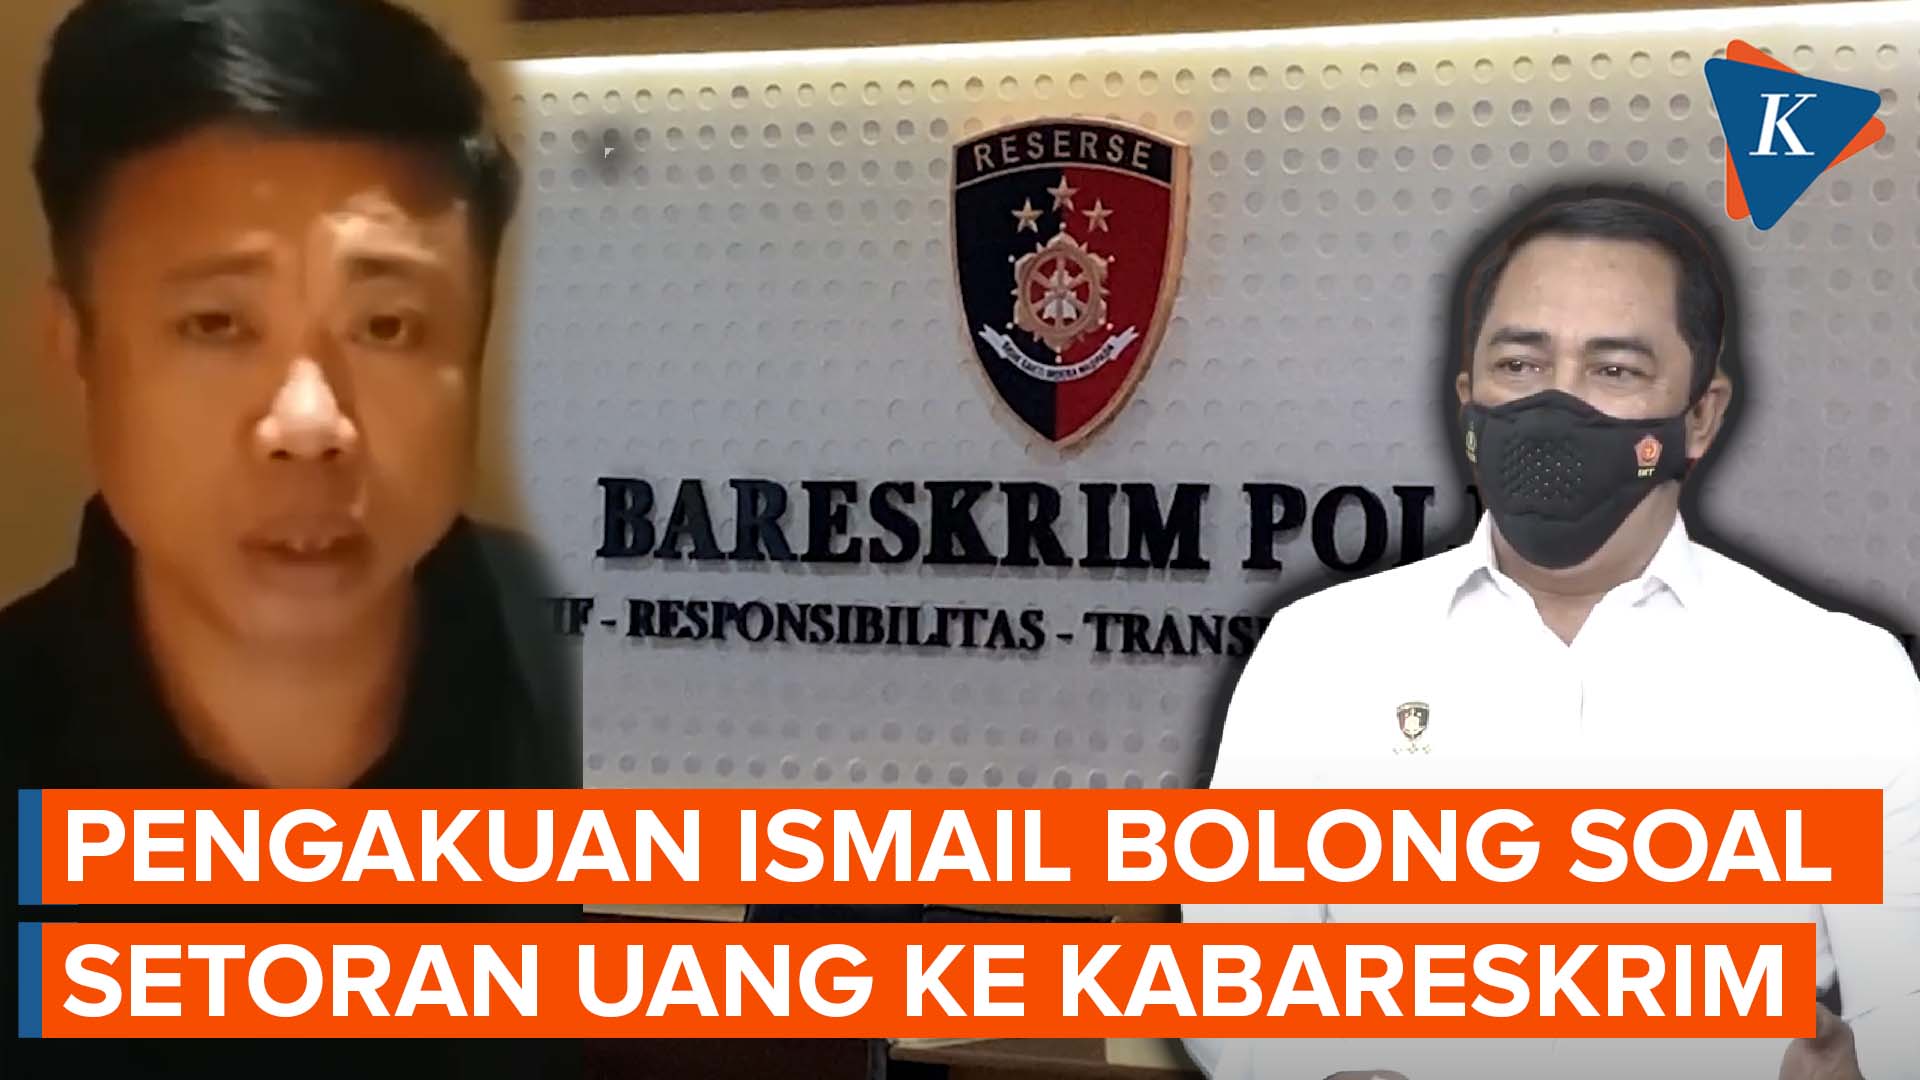 Ismail Bolong yang Mengaku Setor Rp 6 Miliar ke Kabareskrim, Ternyata Mantan Anggota Polri